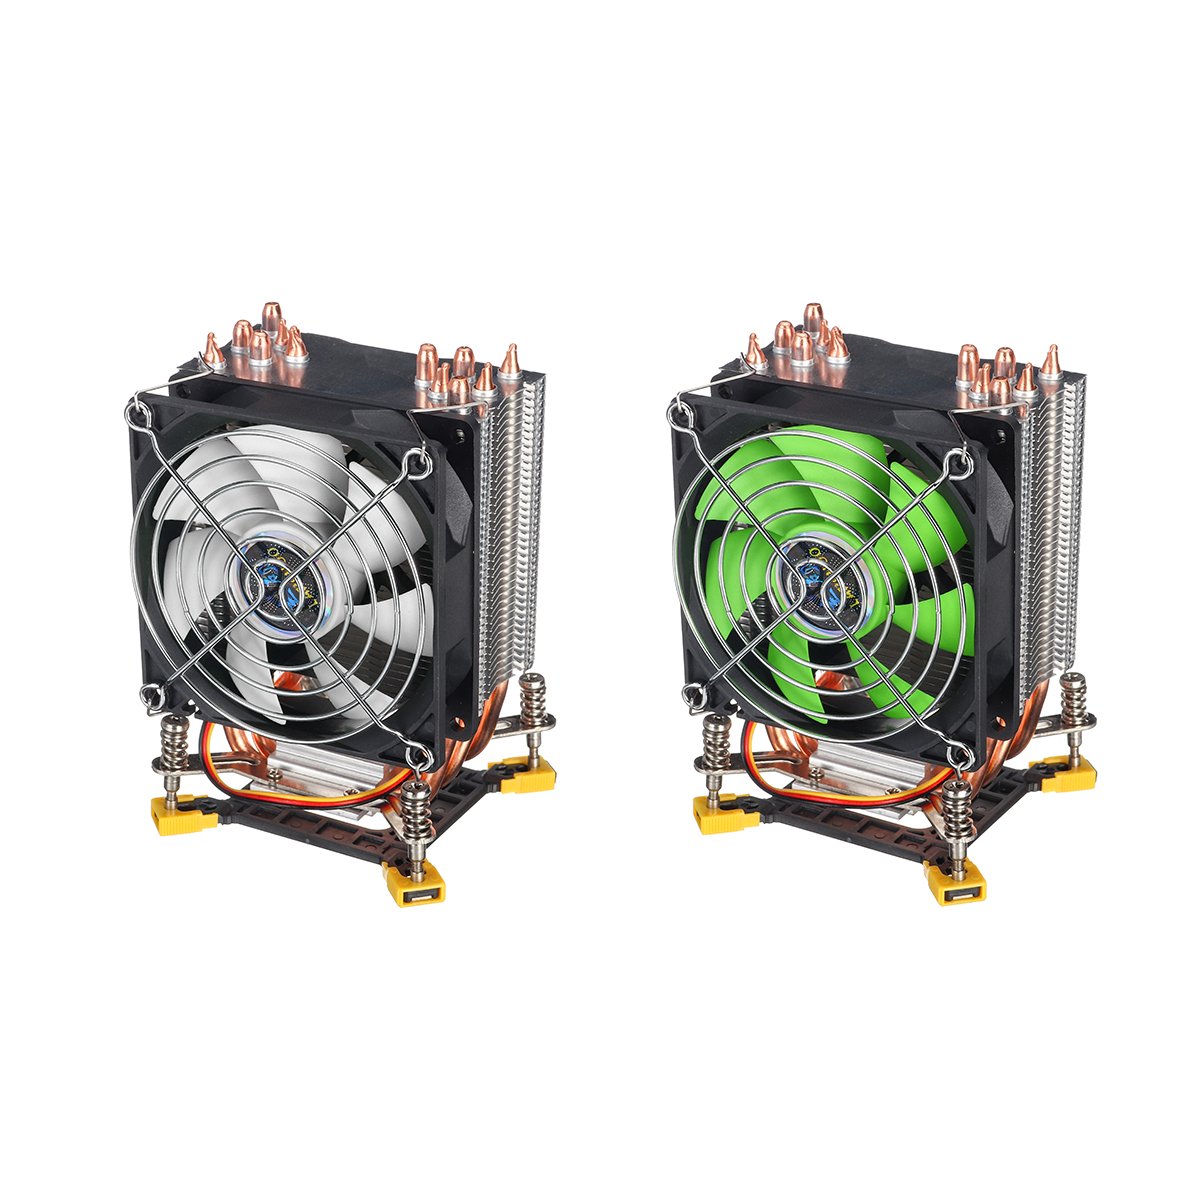 3 Pin 90cm 6 Heat Pipes Cooler Cooling Fan Heatsink For 115X 1366 Motherboard